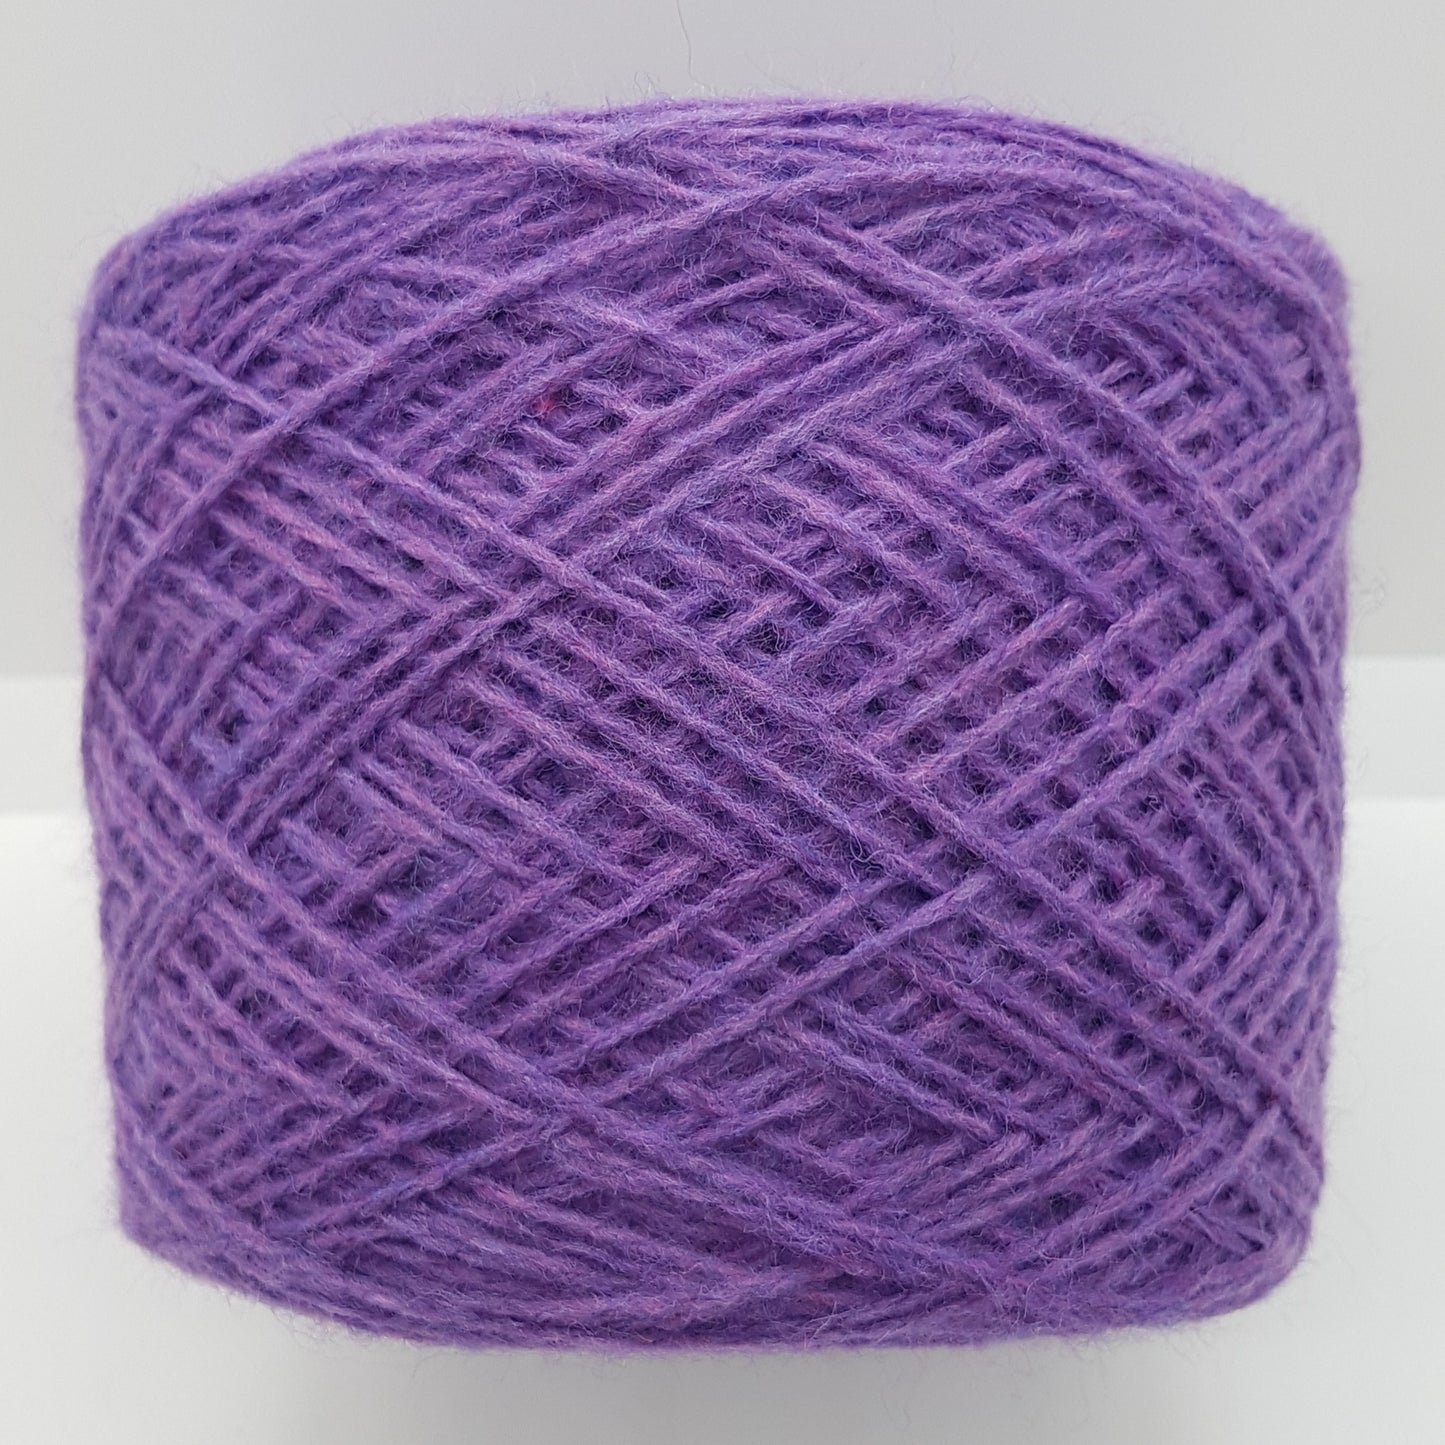 100g Lana Acrílico Hilo Italiano color Púrpura Mélange N.319